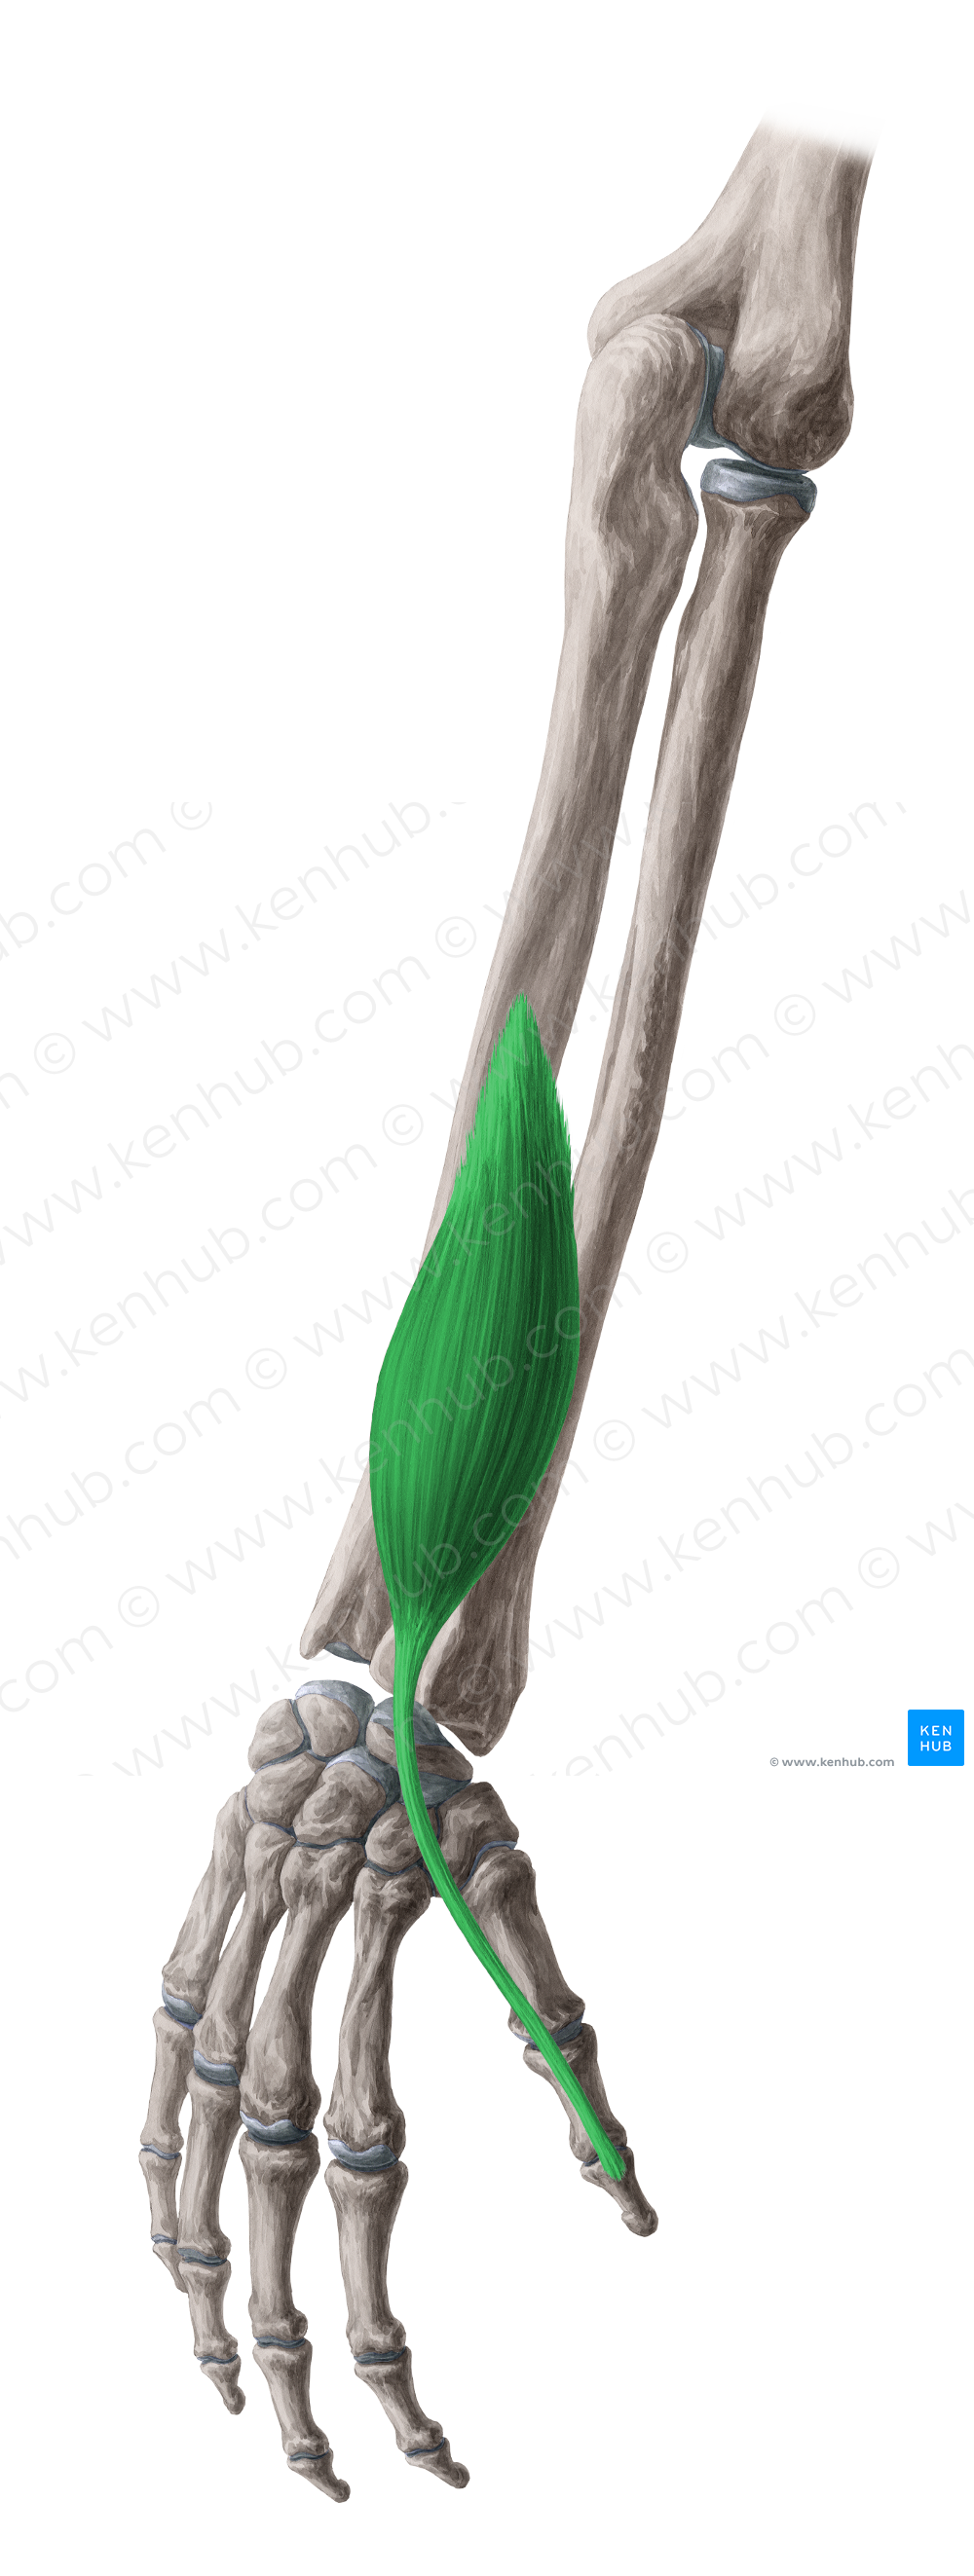 Extensor pollicis longus muscle (#5343)